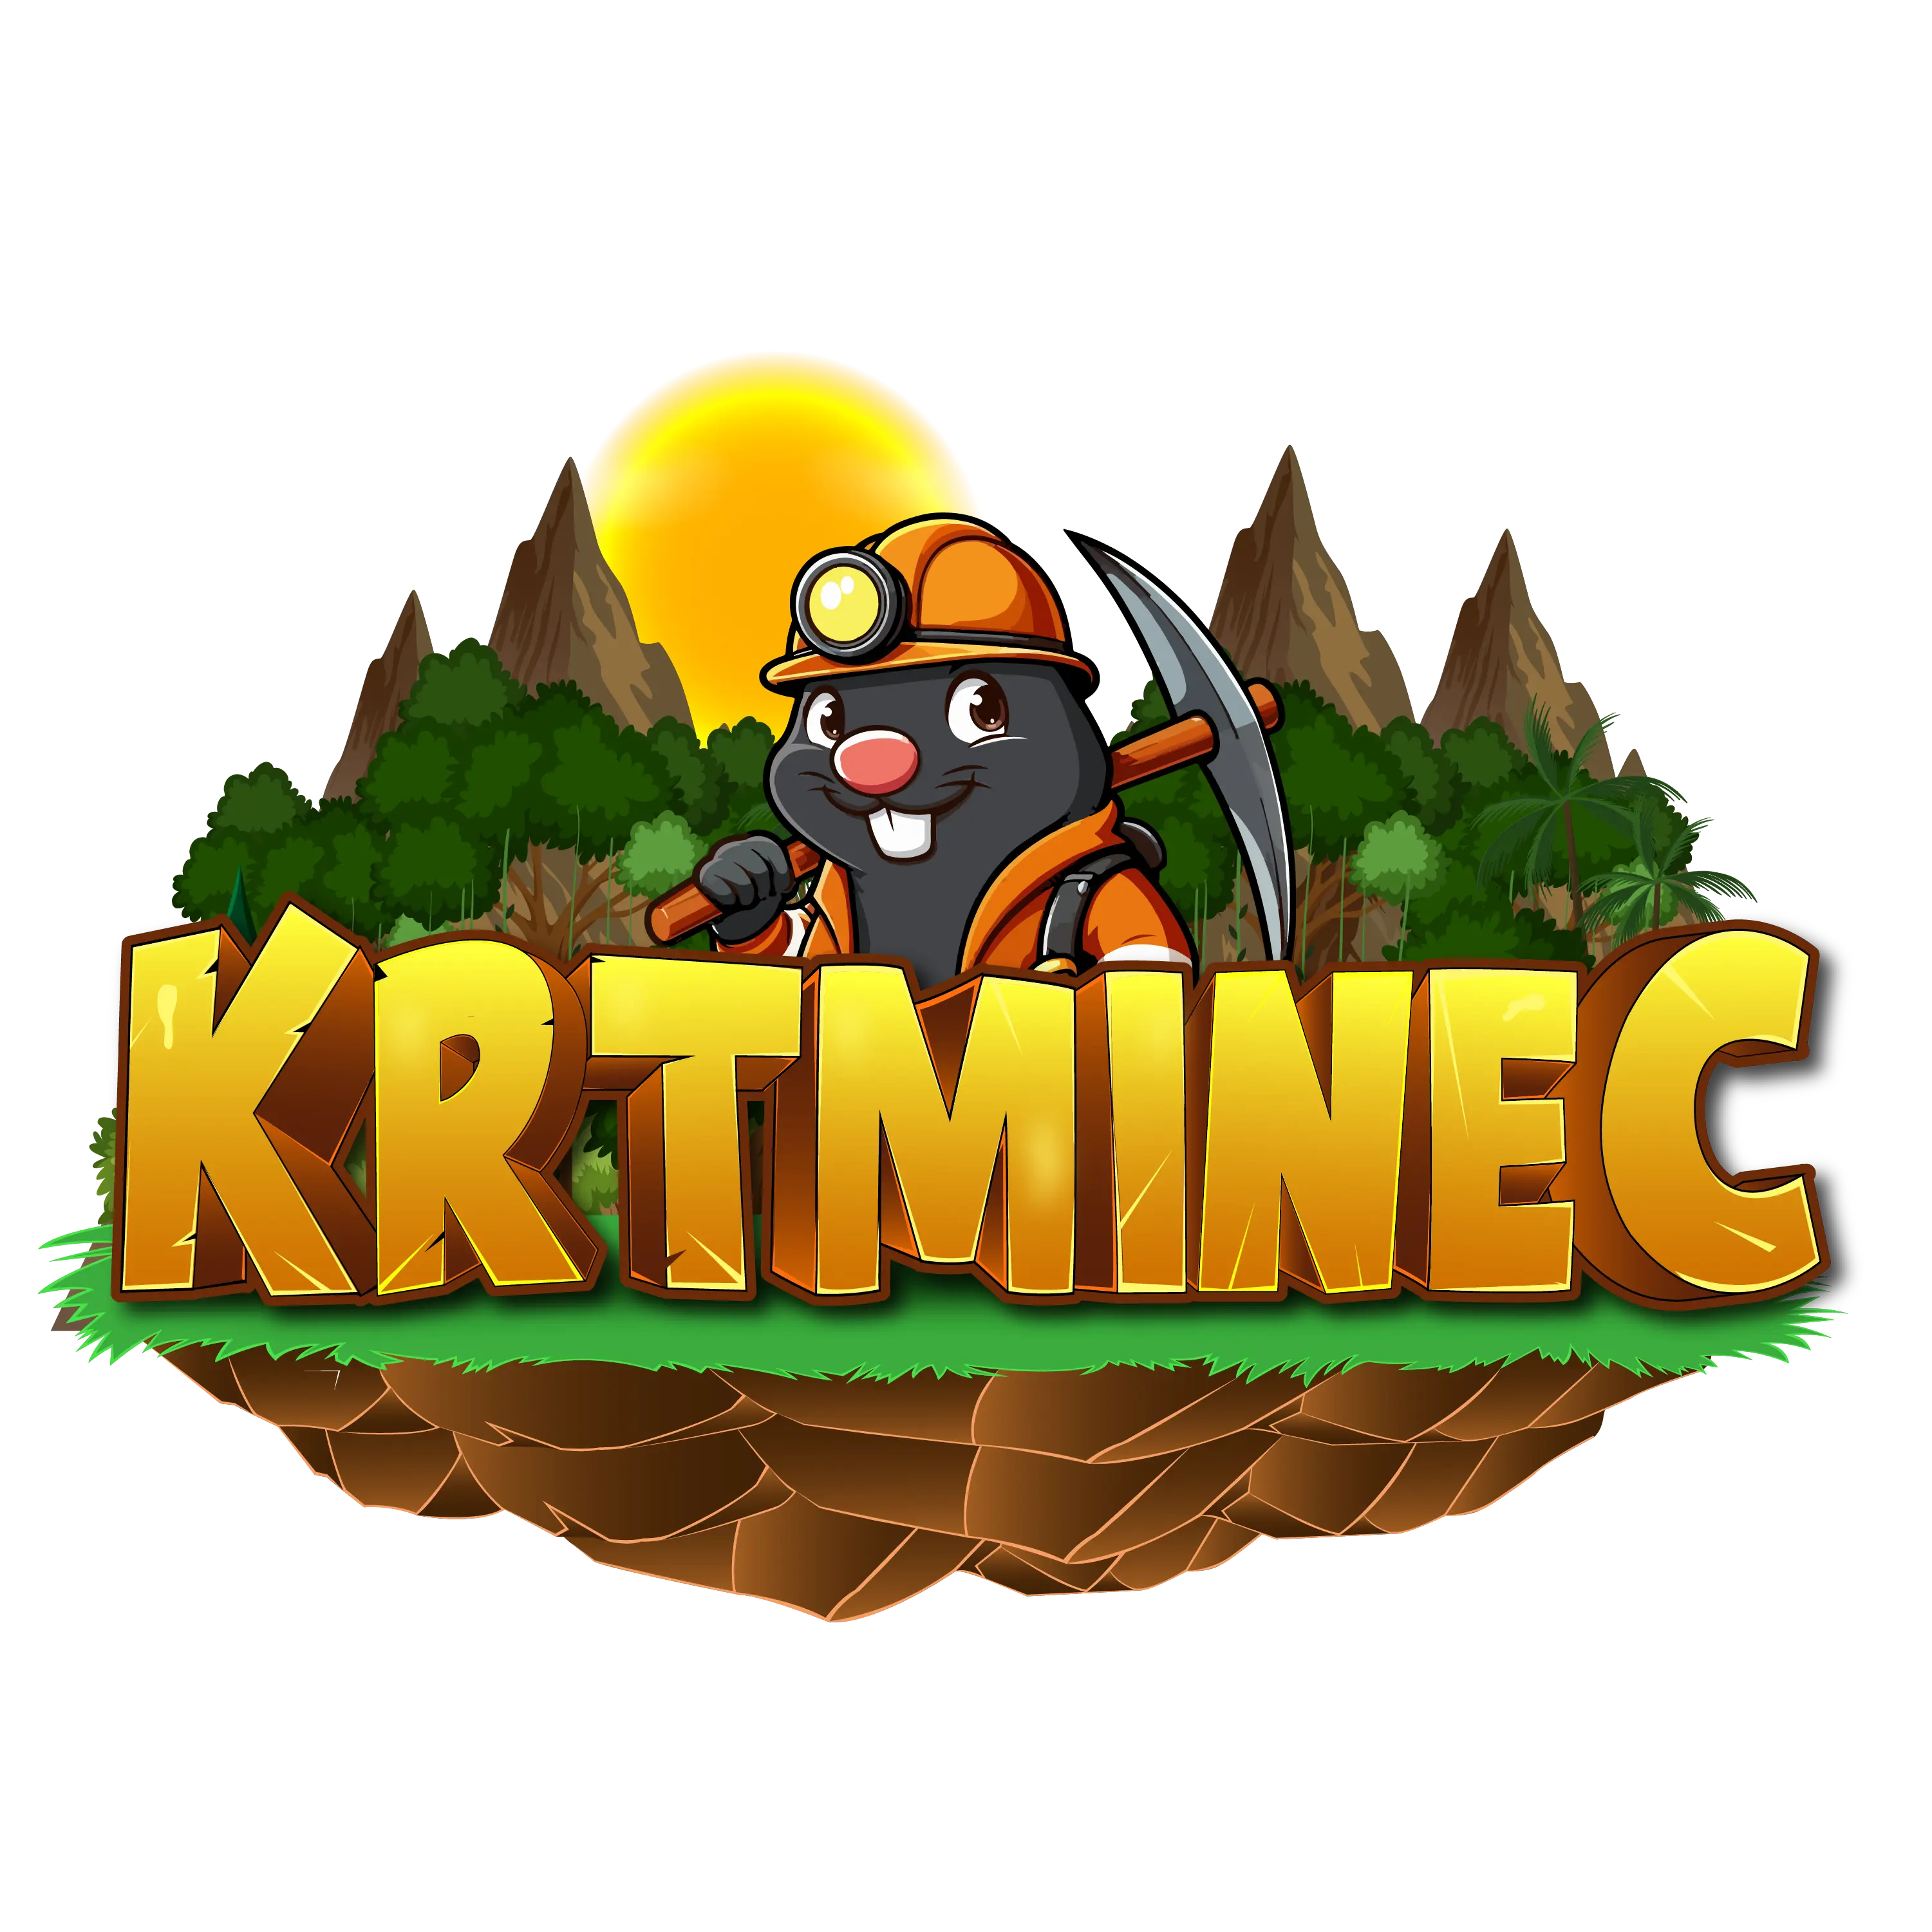 krtminec minecraft server list logo